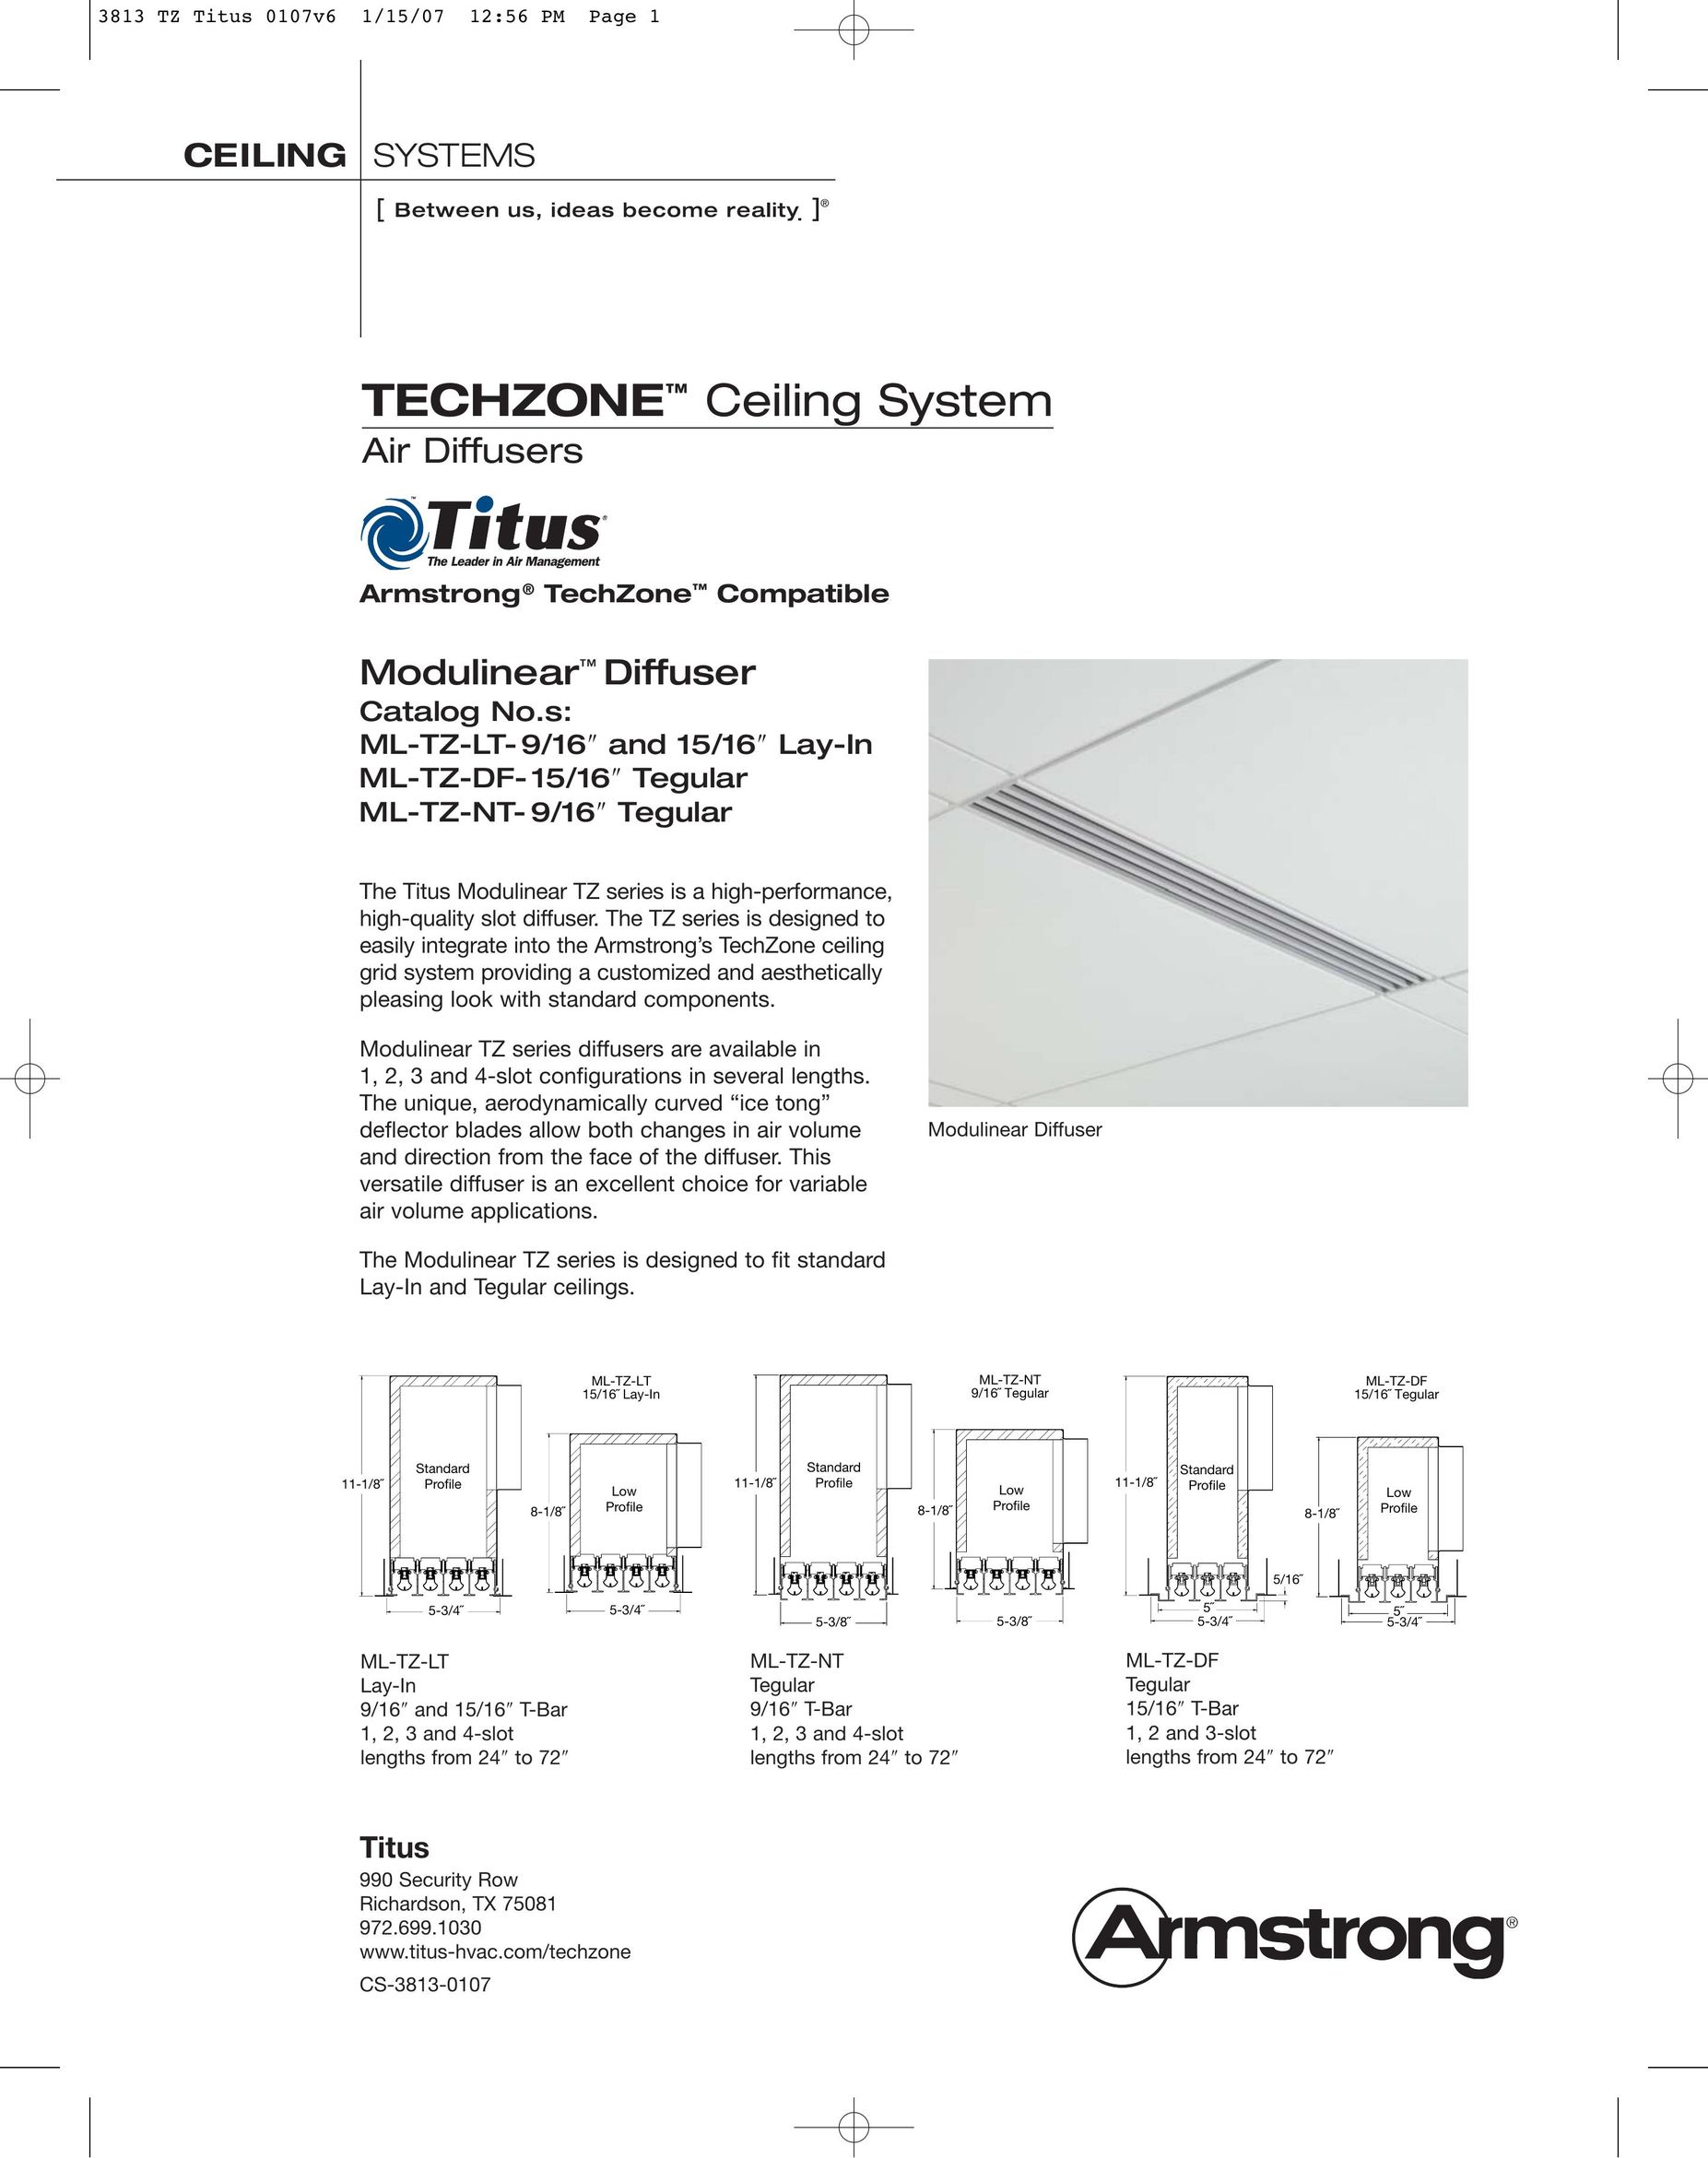 Armstrong World Industries ML-TZ-LT Indoor Furnishings User Manual